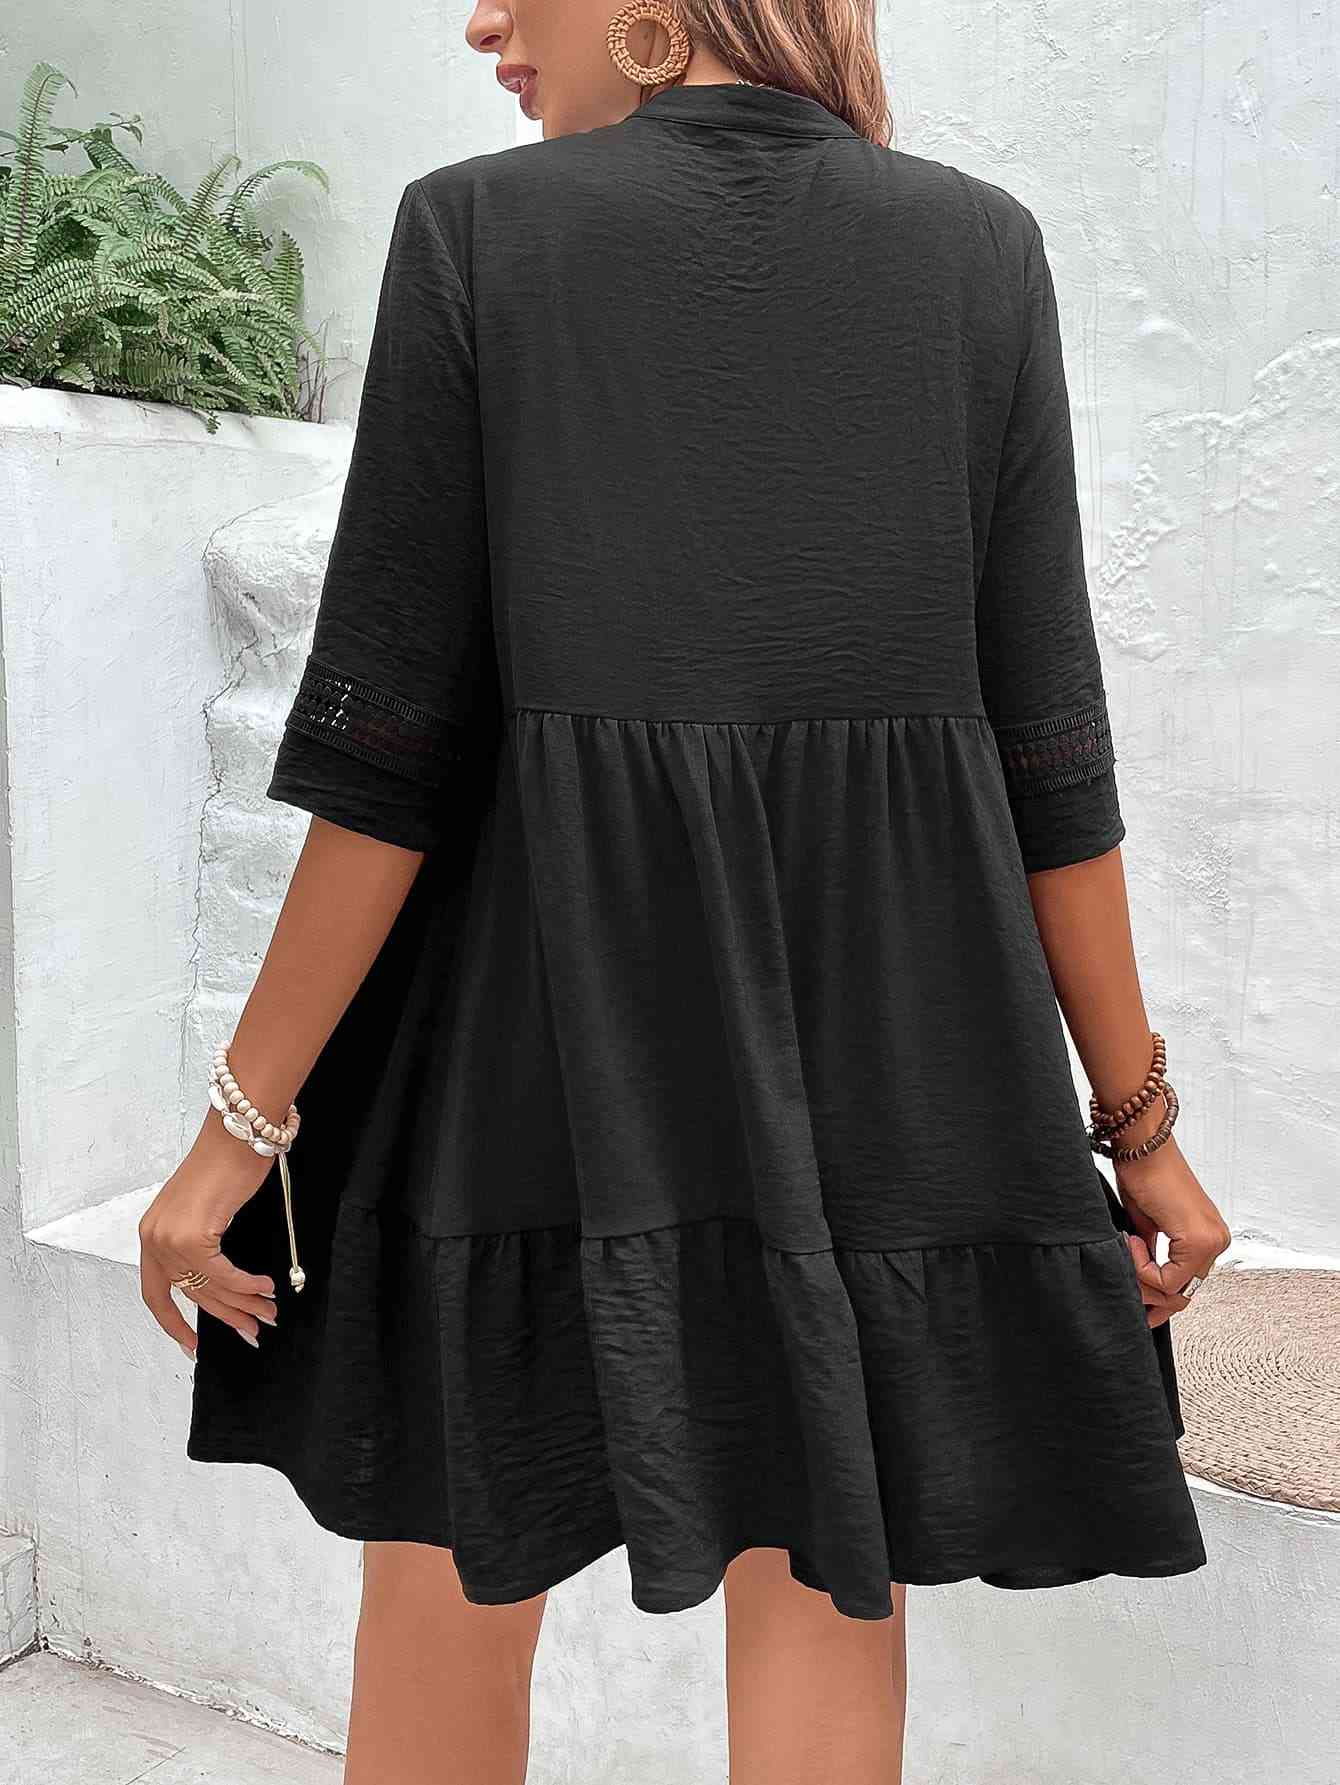 TEEK - Black Notched Neck Half Sleeve Dress DRESS TEEK Trend   